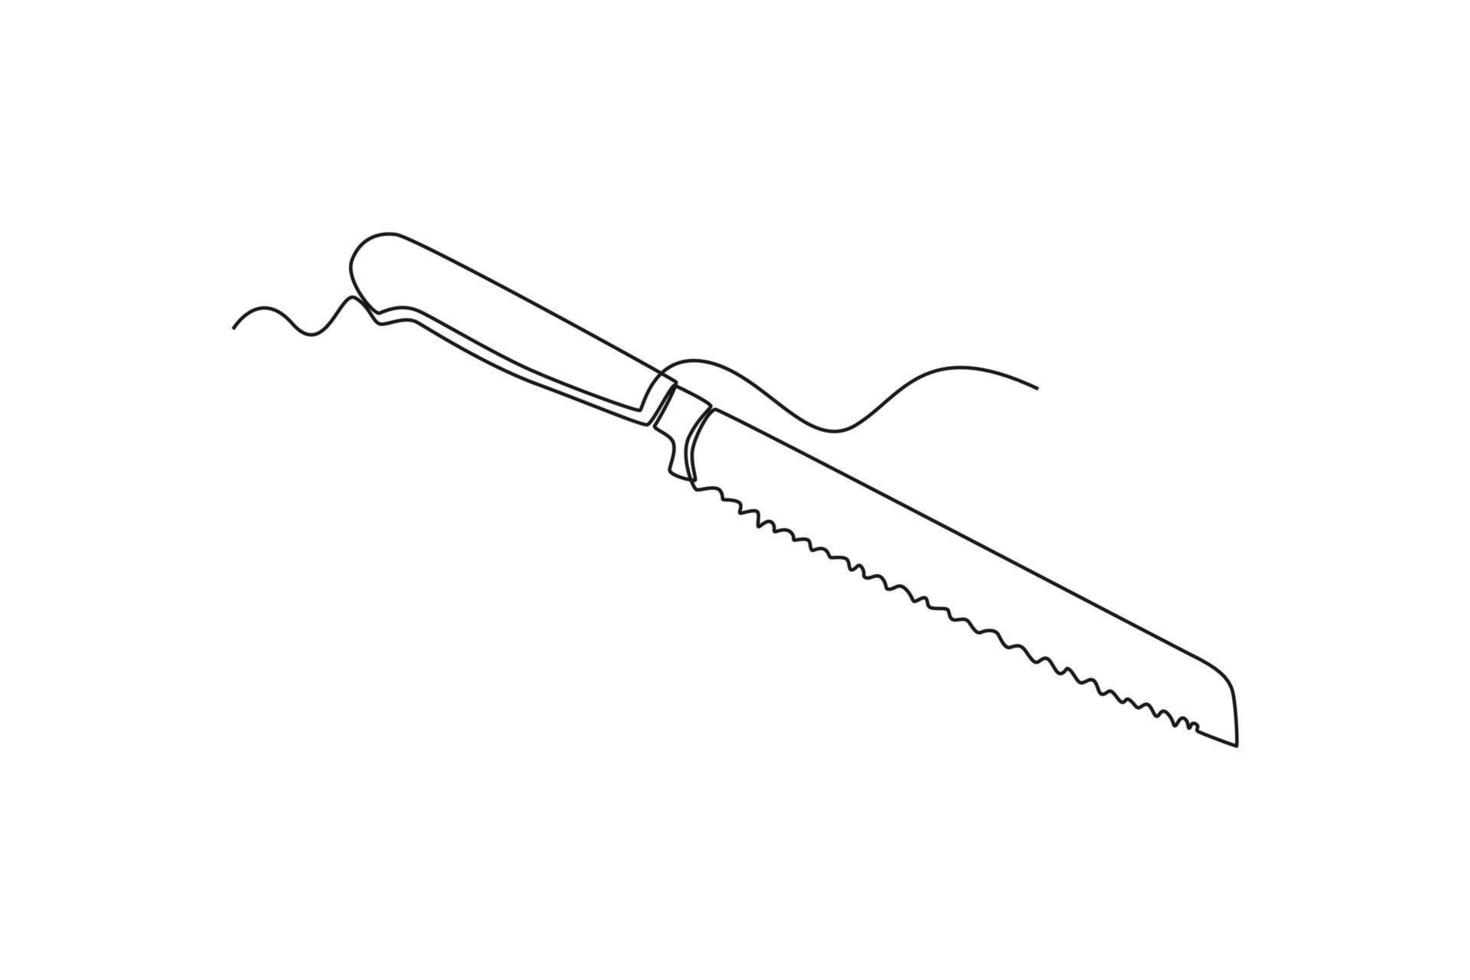 enda ett linje teckning bröd kniv. porslin begrepp. kontinuerlig linje dra design grafisk vektor illustration.